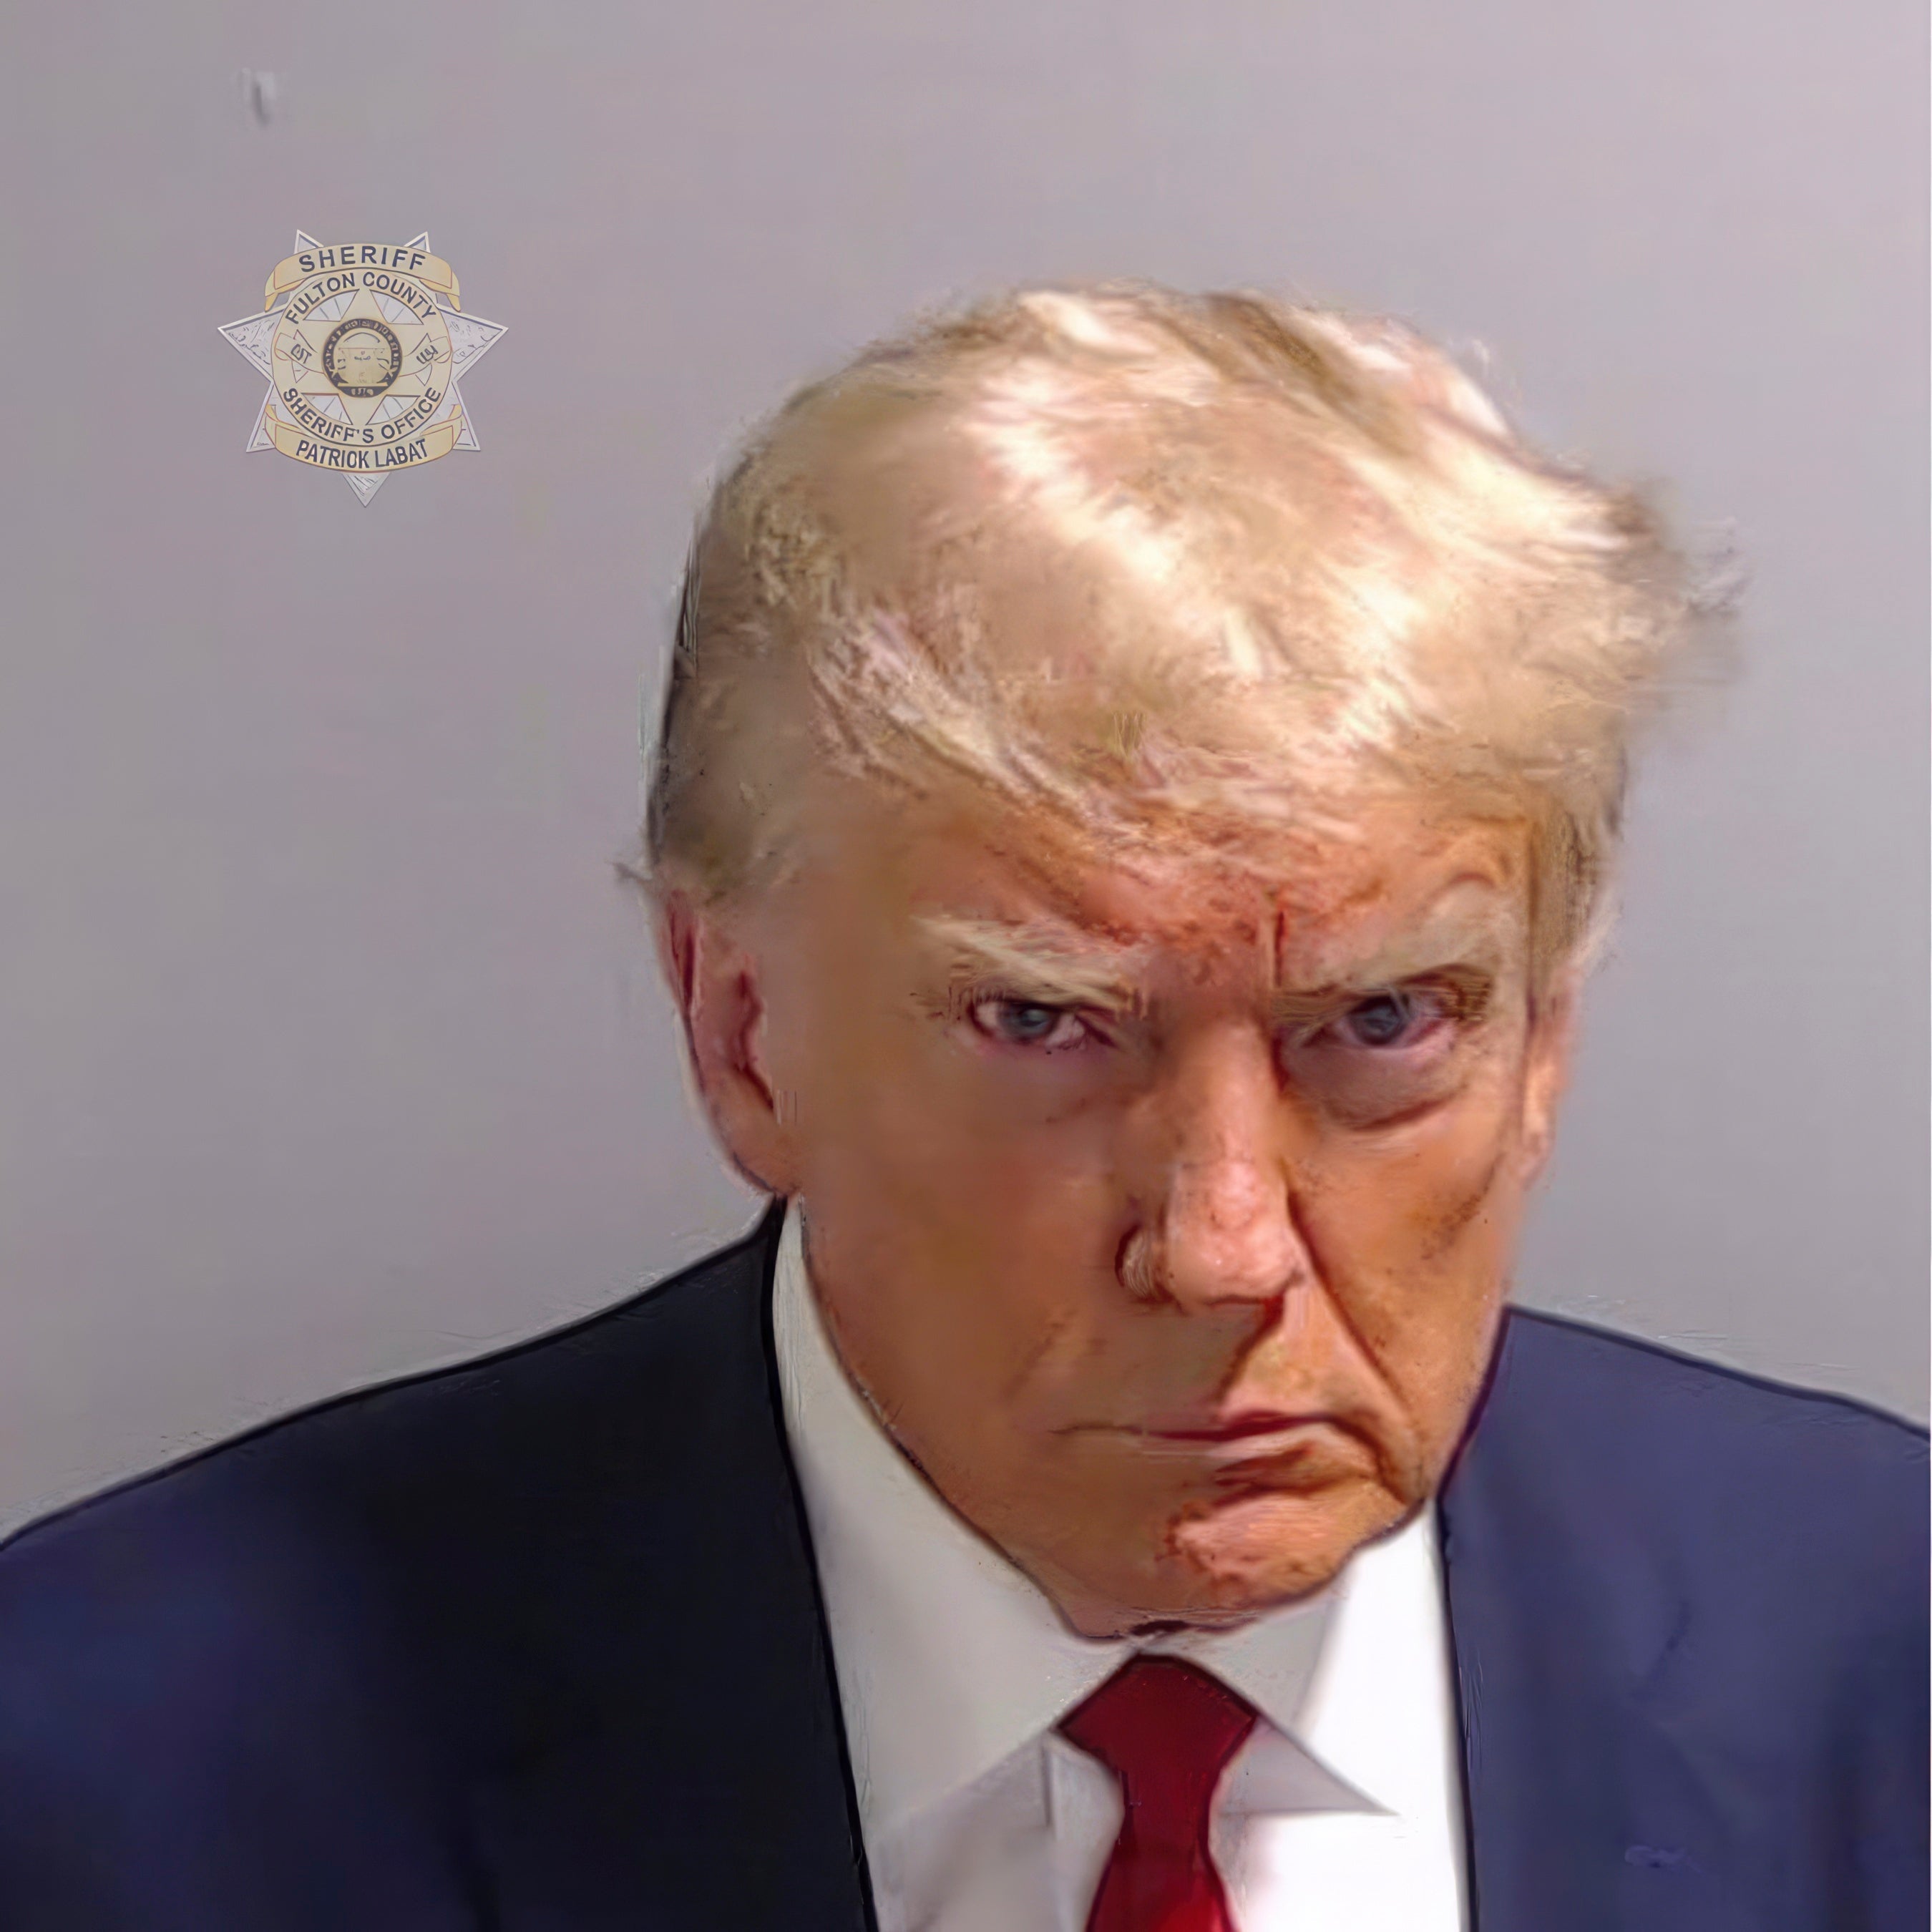 Donald Trump’s long-awaited mugshot